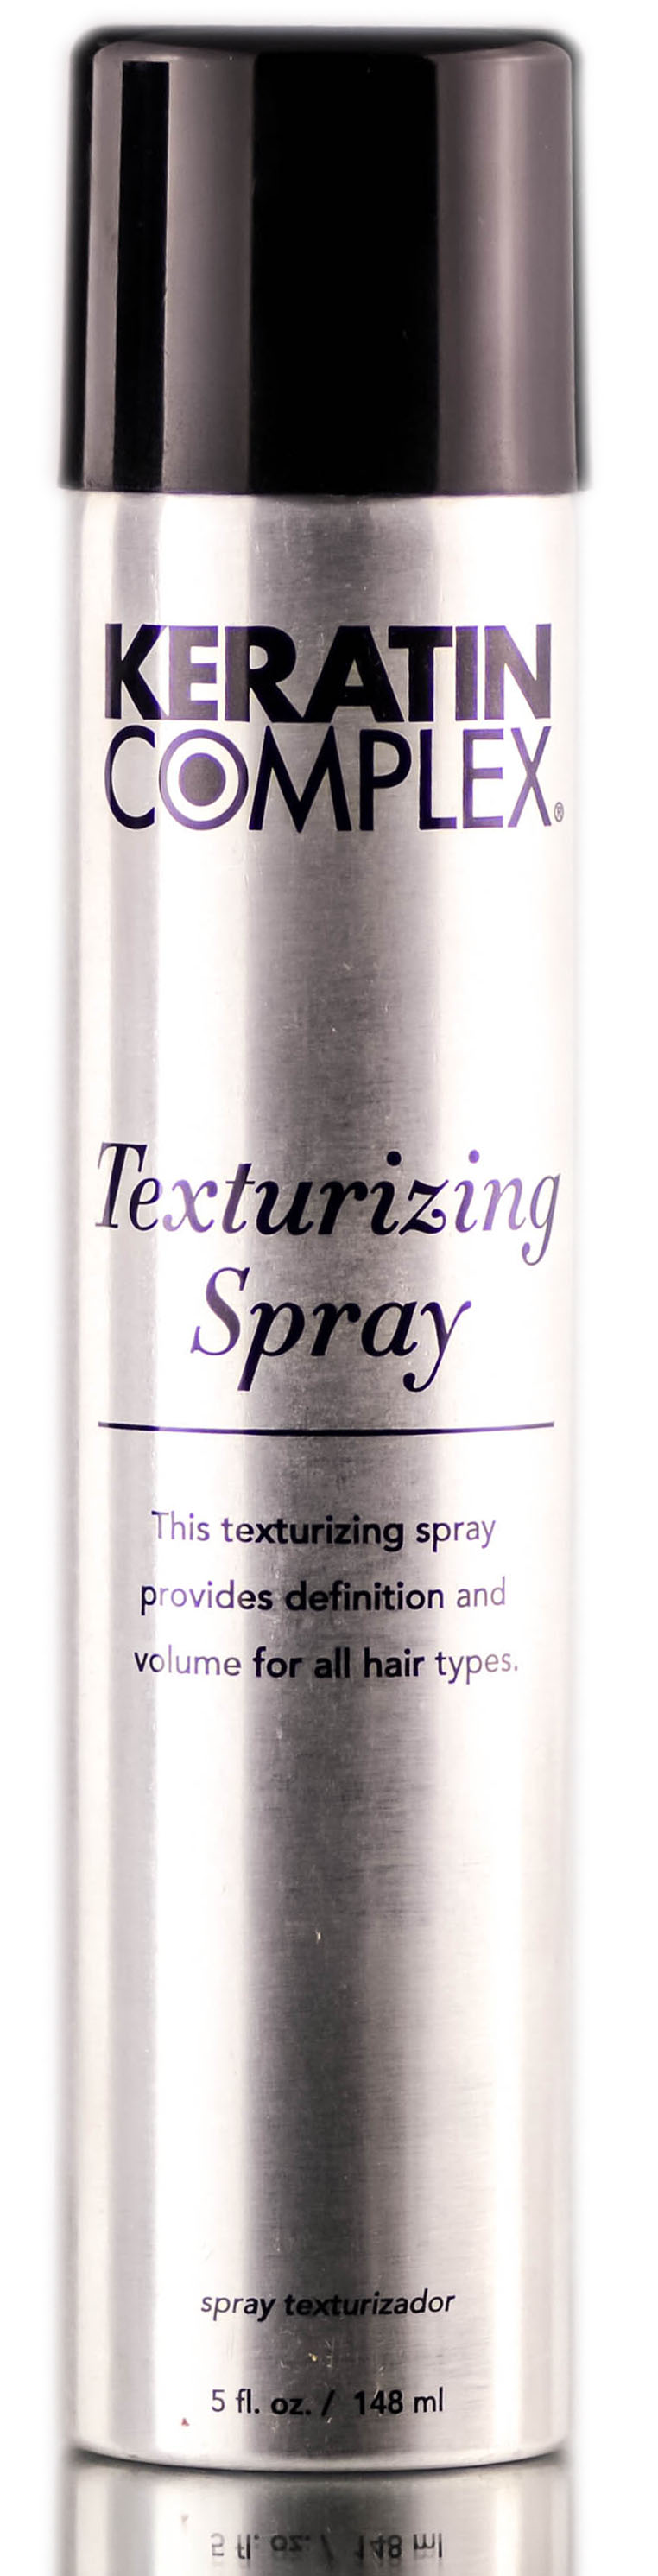 Keratin Complex Texturizing Hairspray - 5 Oz - image 1 of 2